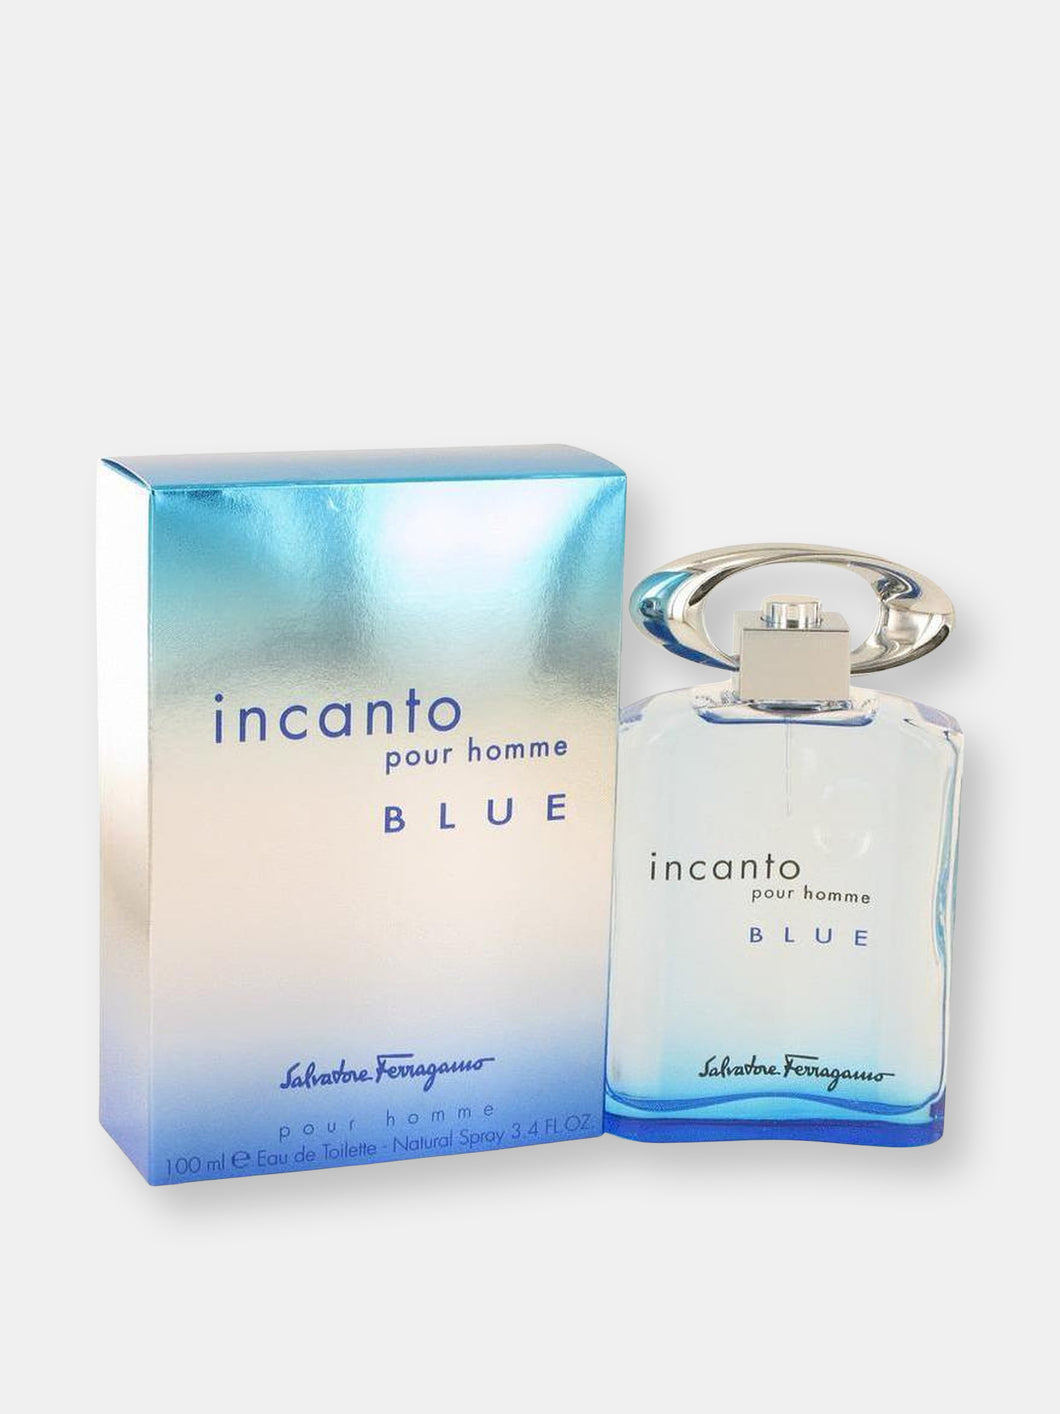 Incanto Blue by Salvatore Ferragamo Eau De Toilette Spray 3.4 oz